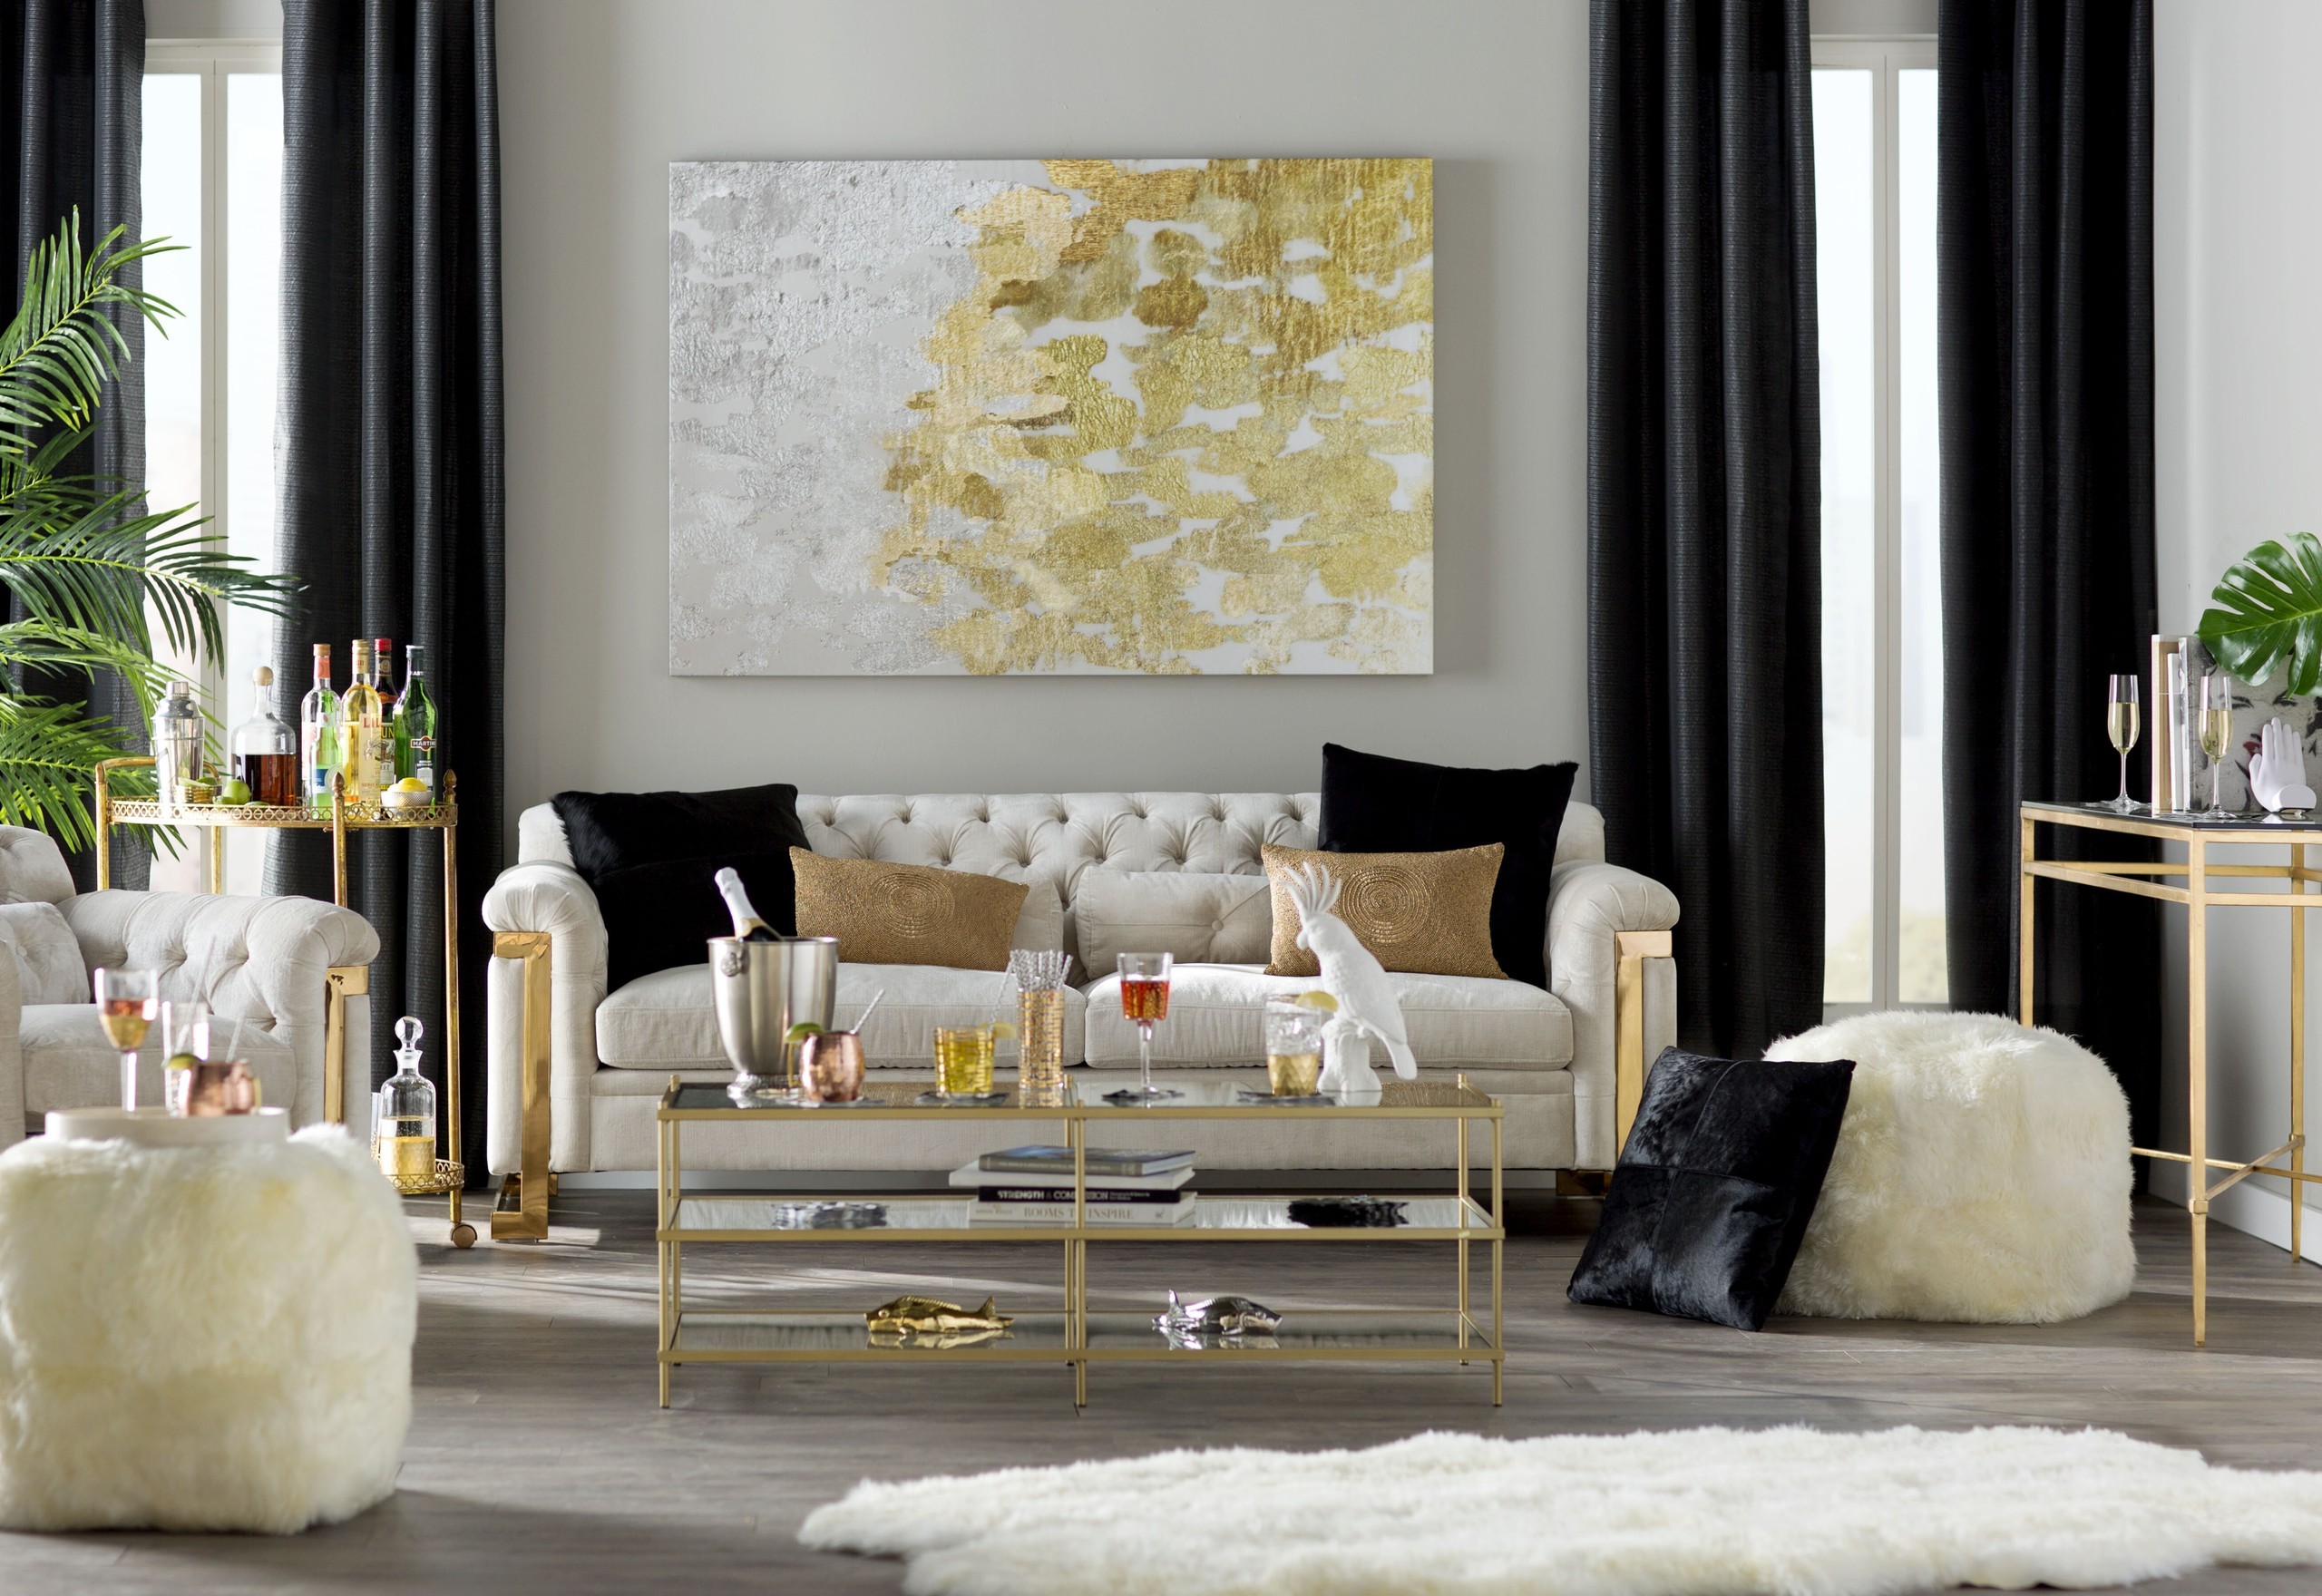 Gold and Black Living Room Design